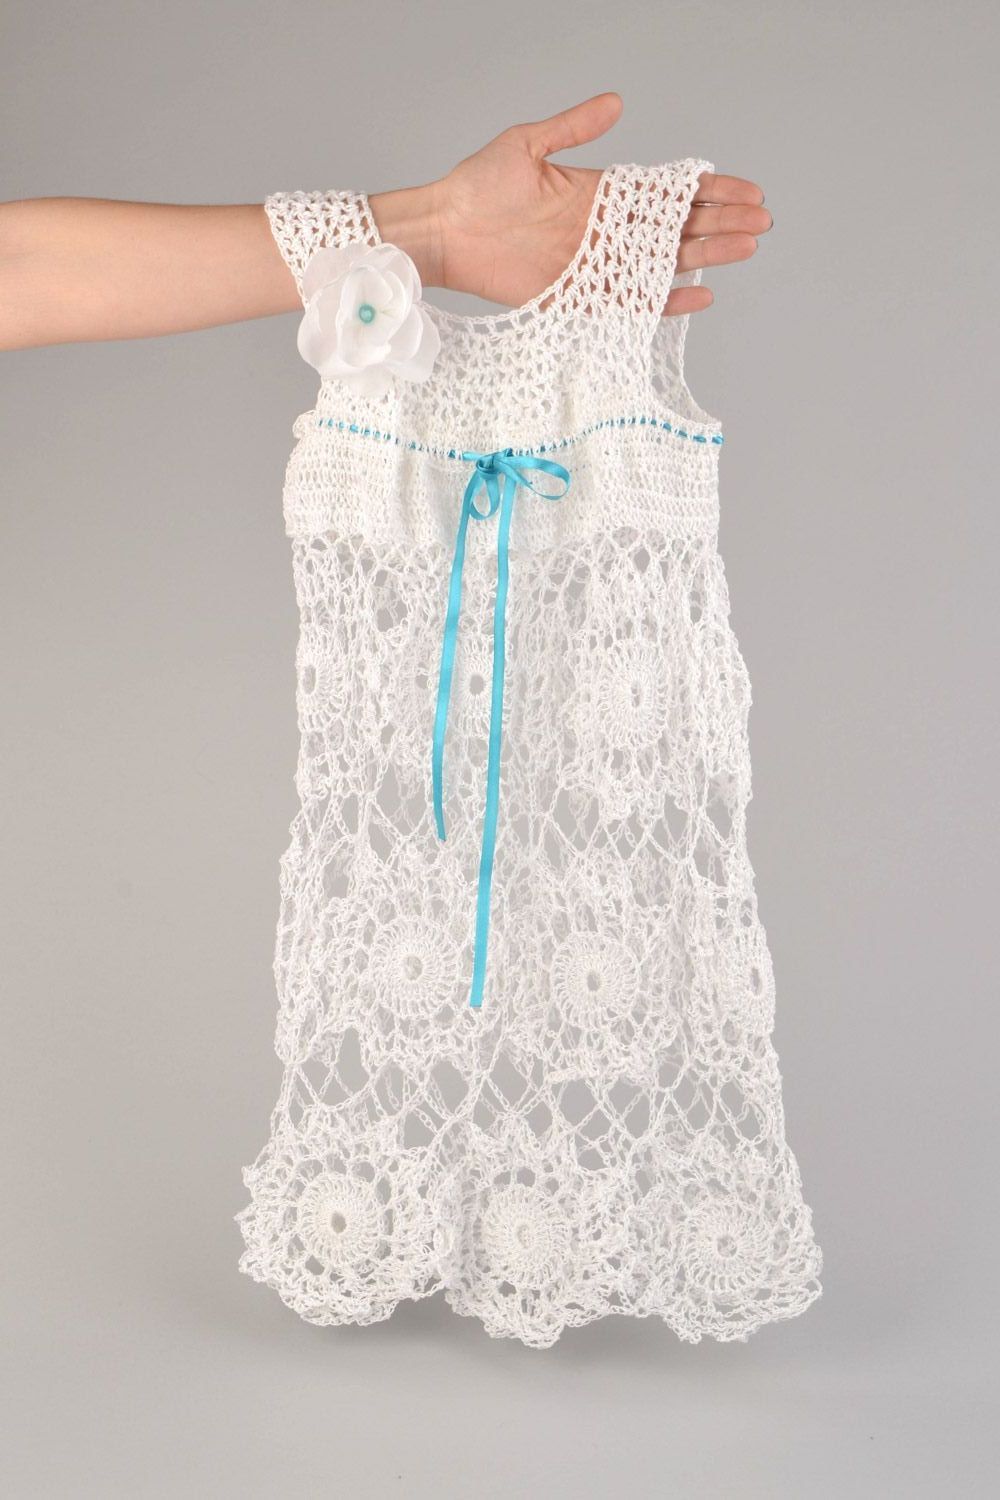 Handmade  elegant openwork crochet baby dress of white color made of acrylic yarns photo 1